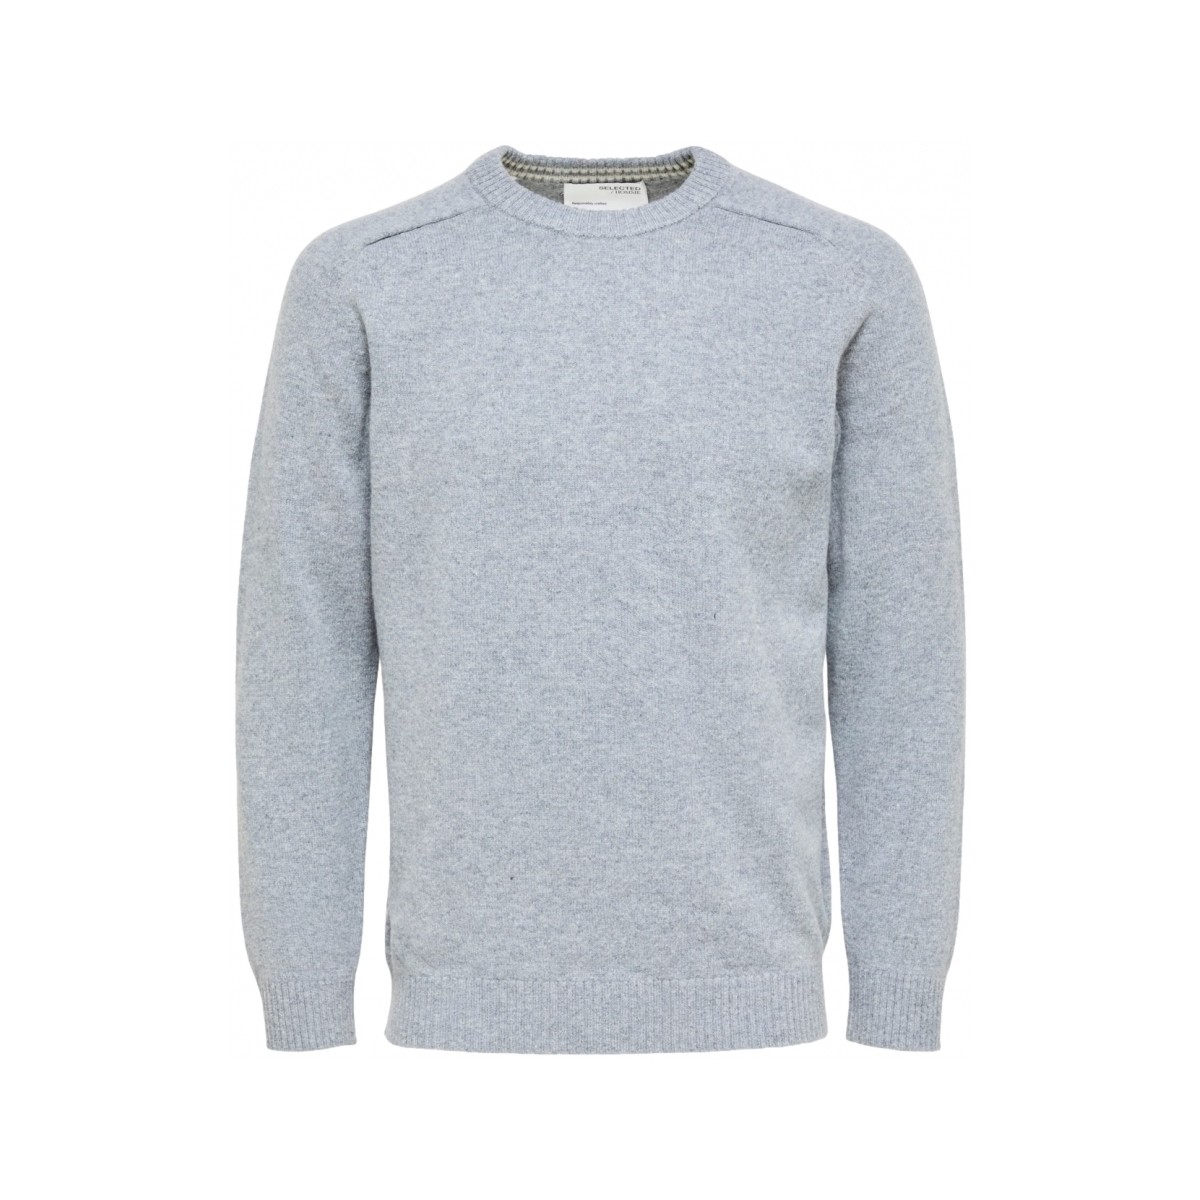 Abbigliamento Uomo Maglioni Selected Wool Jumper New Coban - Medium Grey Melange Grigio